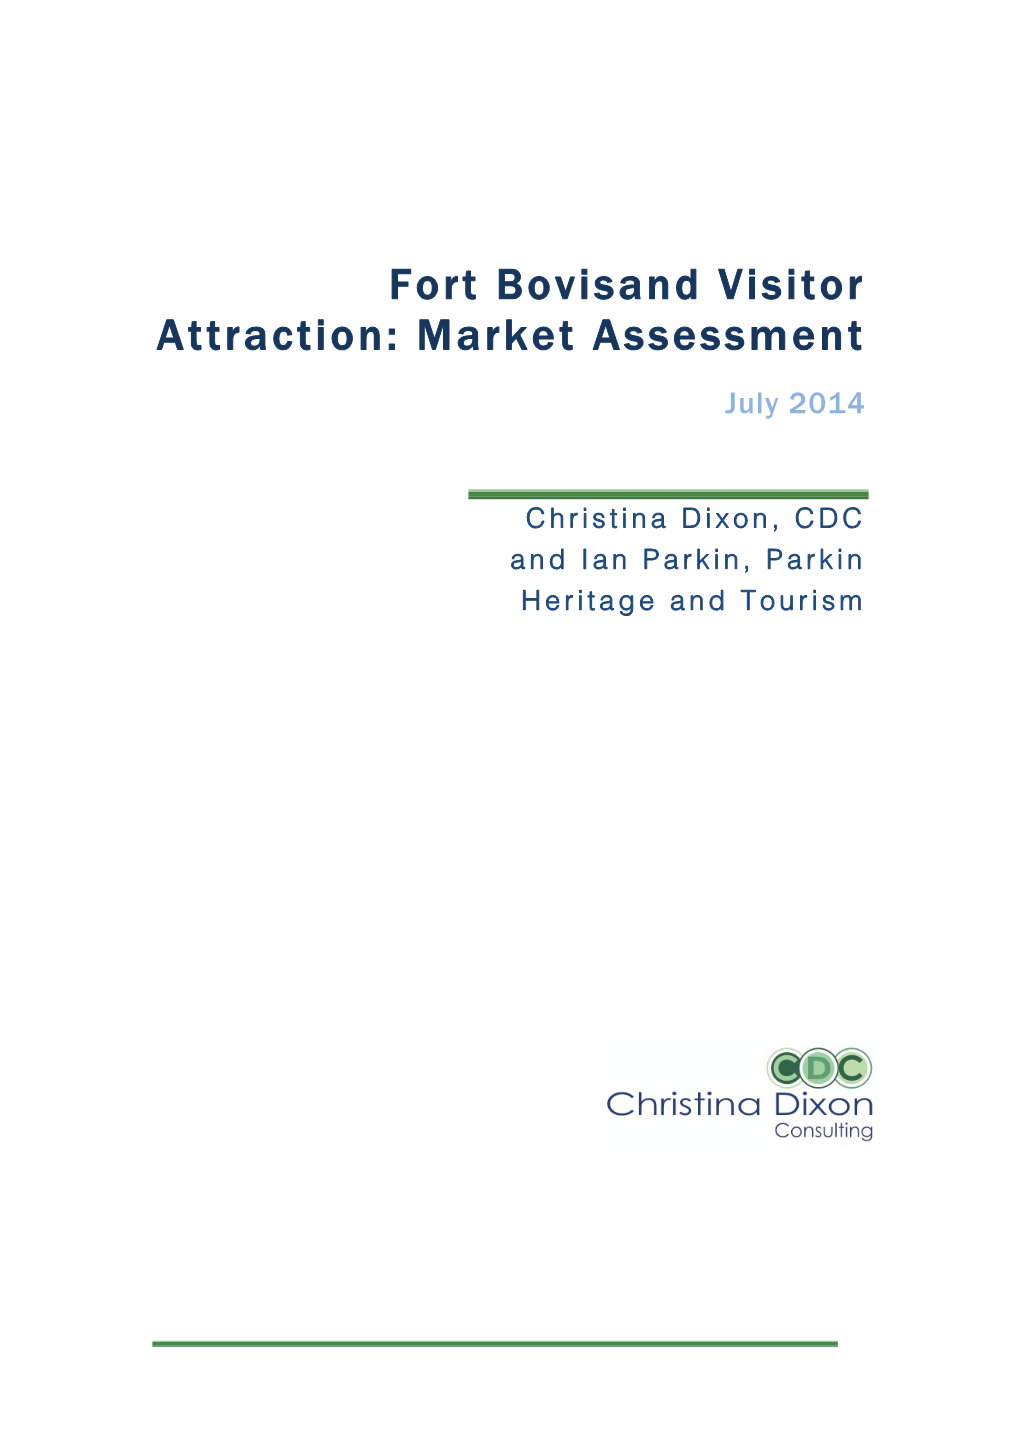 Fort Bovisand Visitor Attraction: Market Assessment July 2014